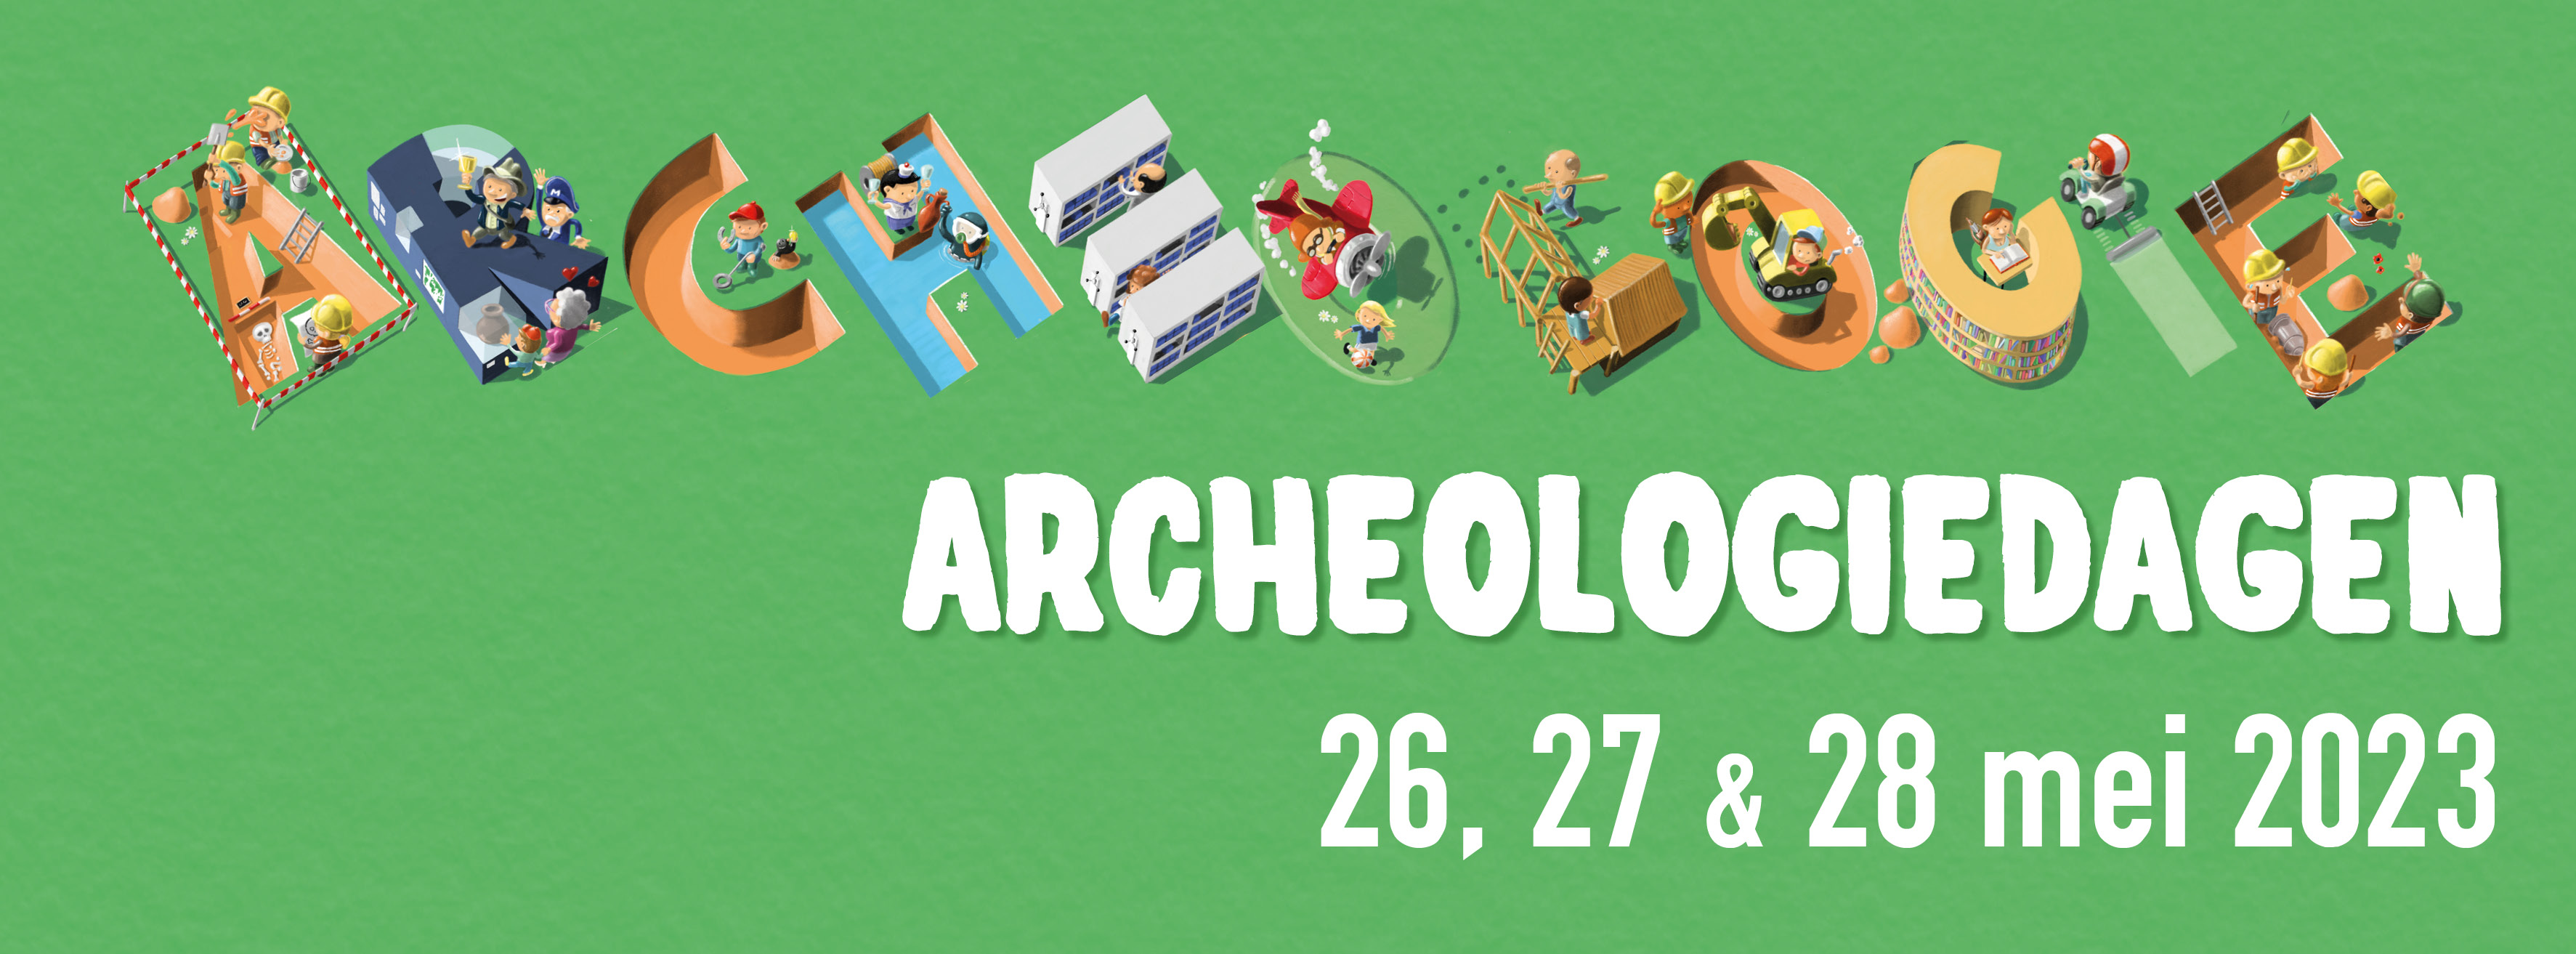 Archeologiedagen banner 2023